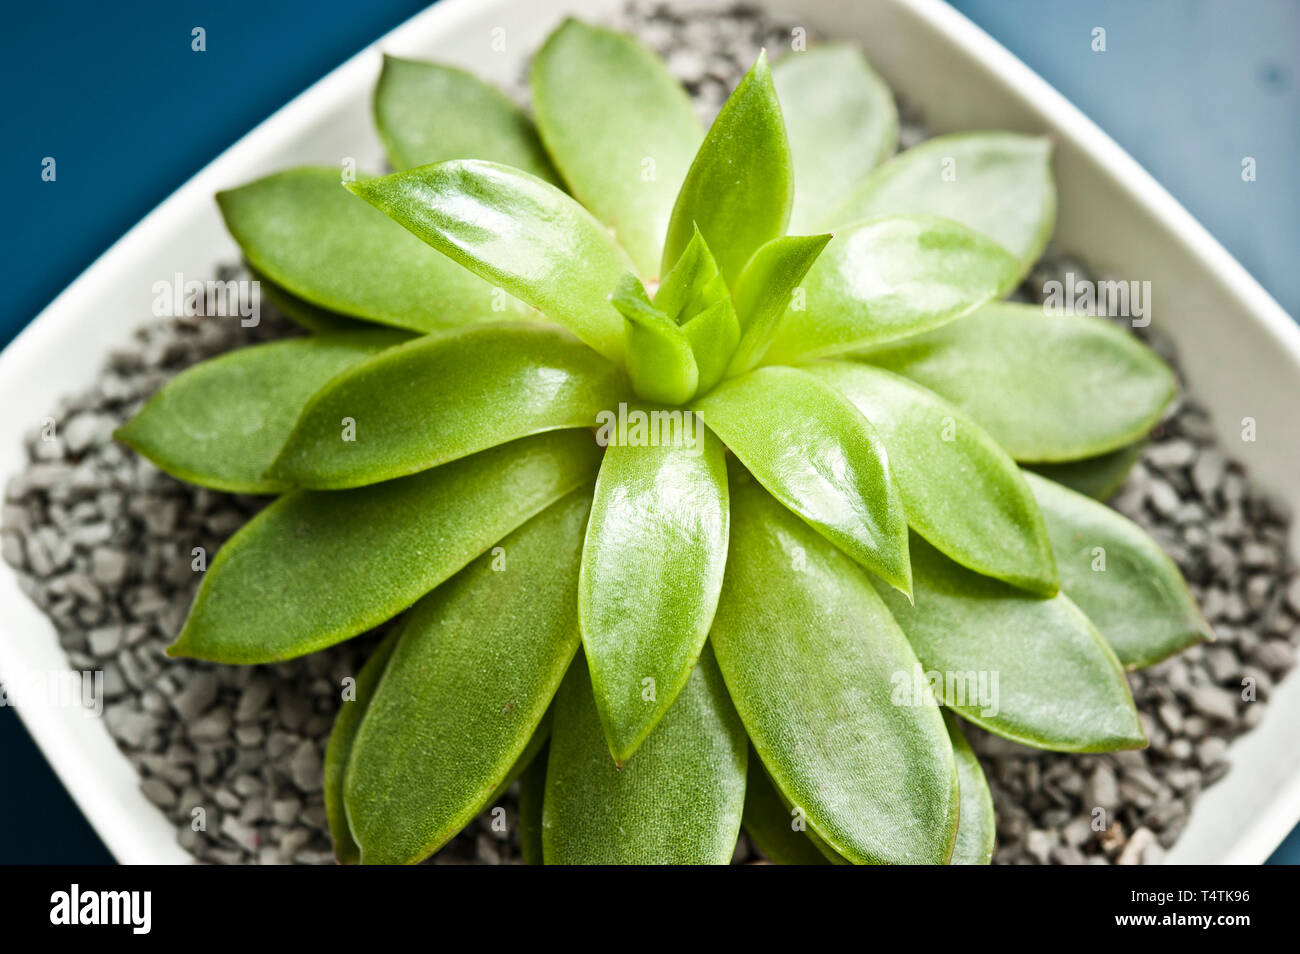 Echeveria succulent plant in a bowl Stock Photo